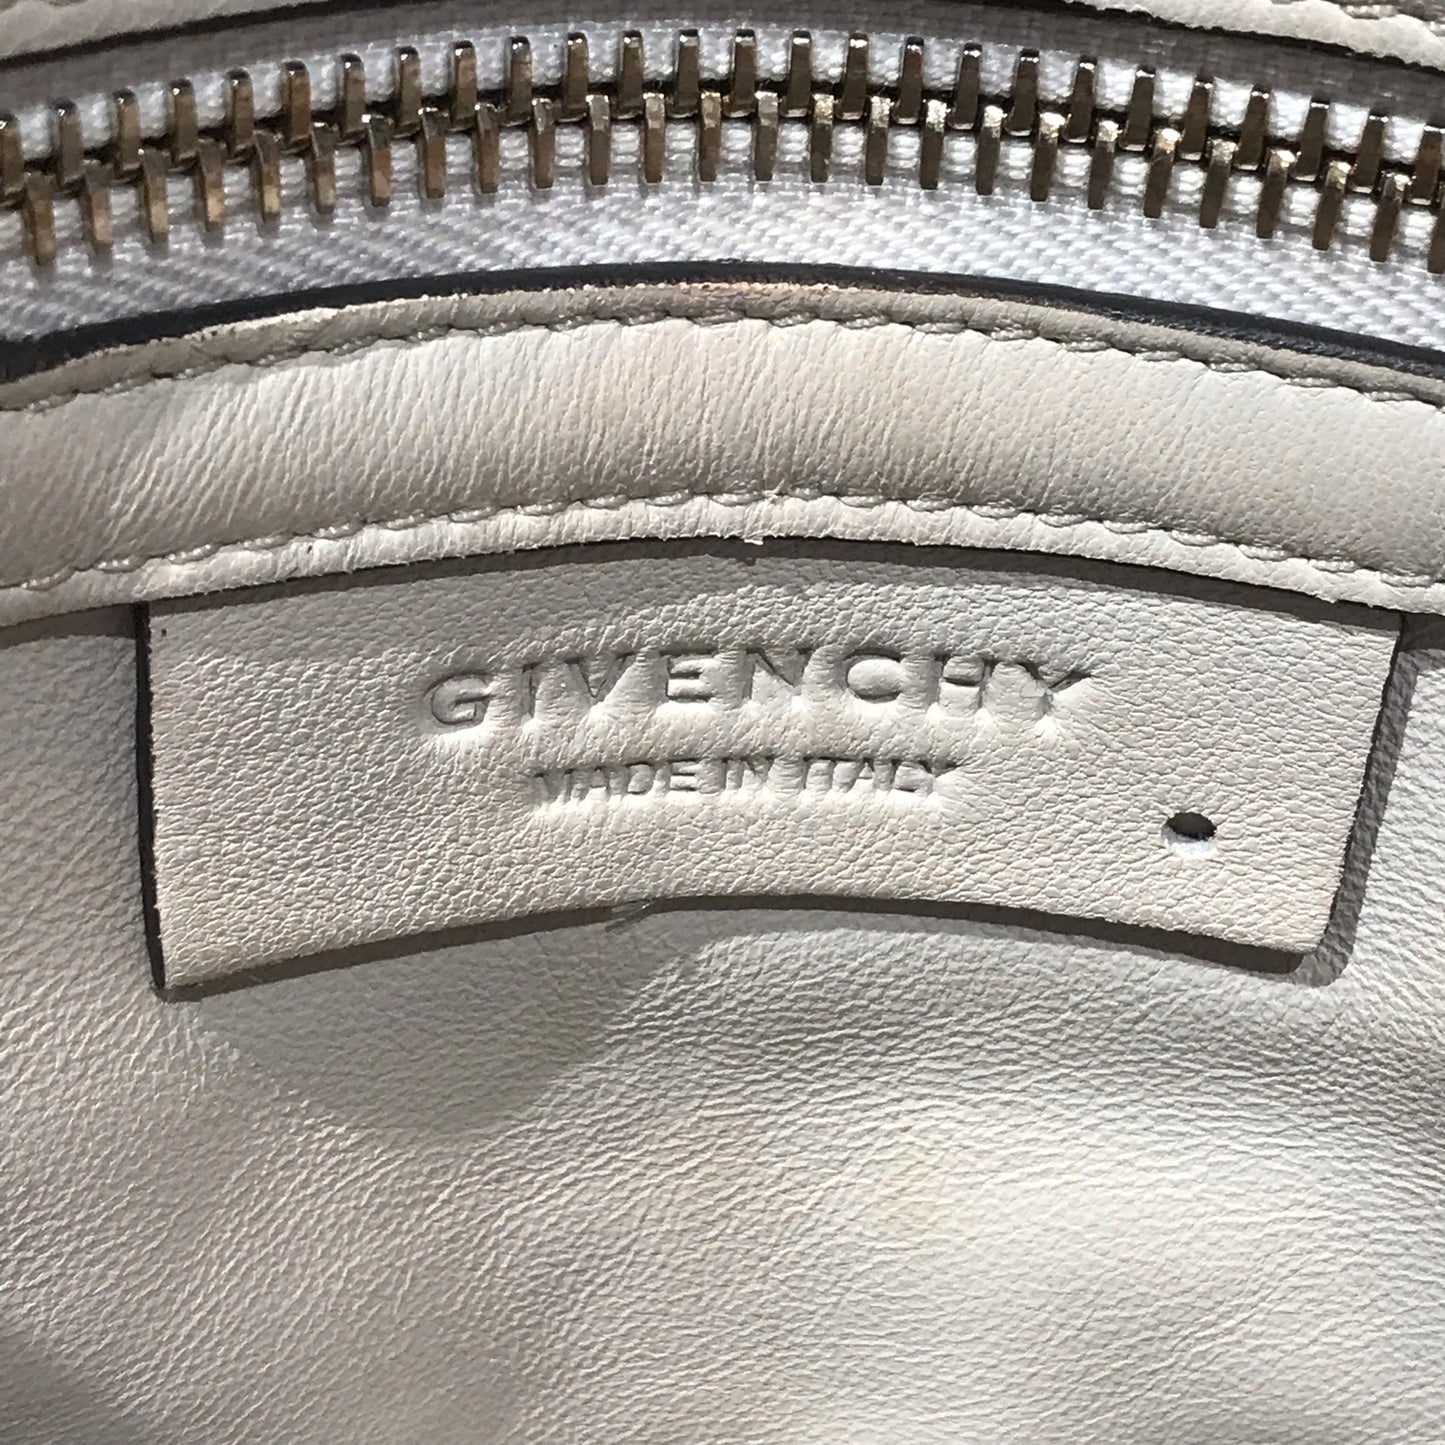 Sac Givenchy en pyhton beige